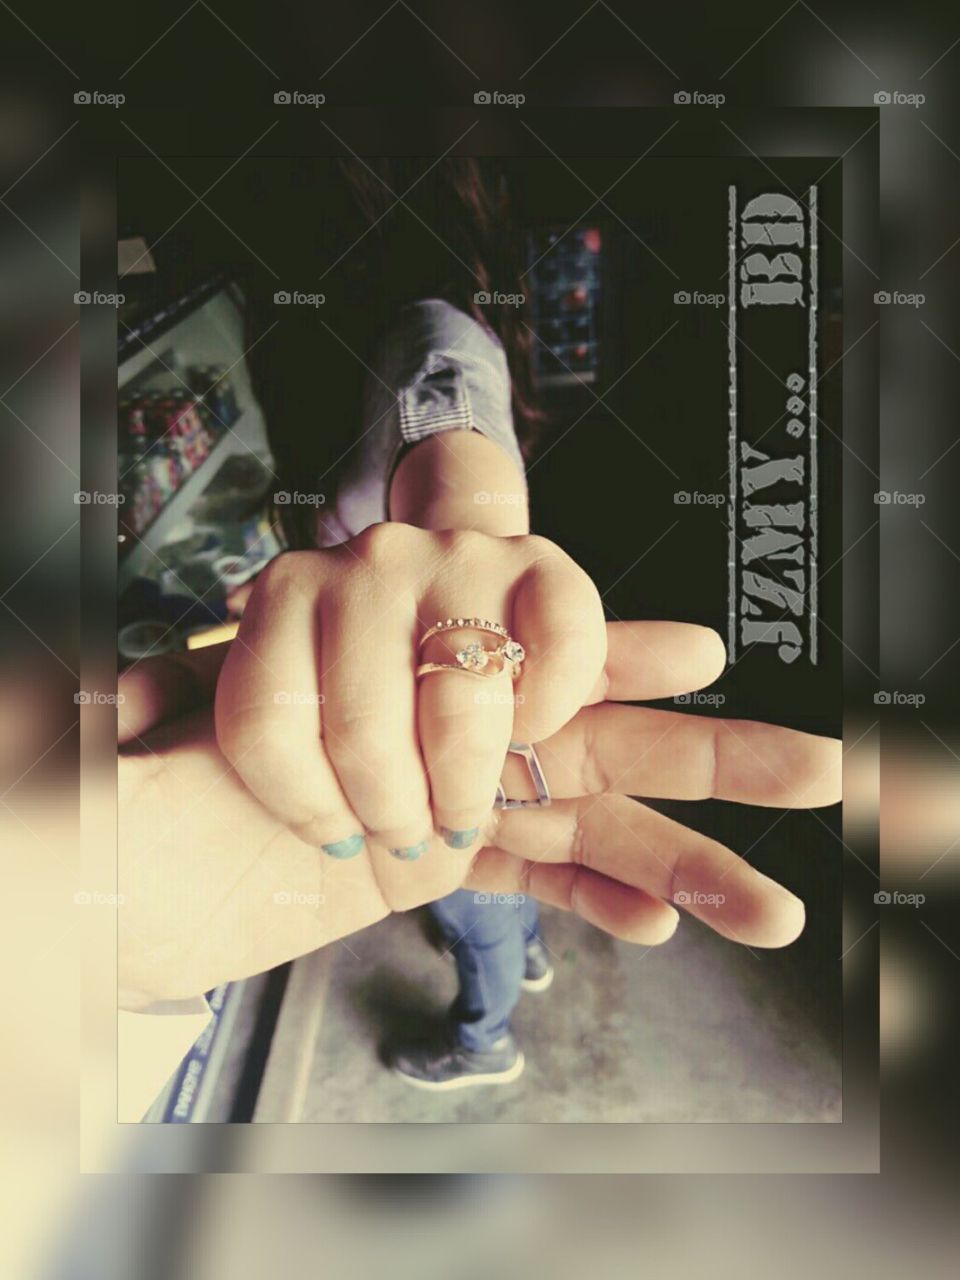 my ring